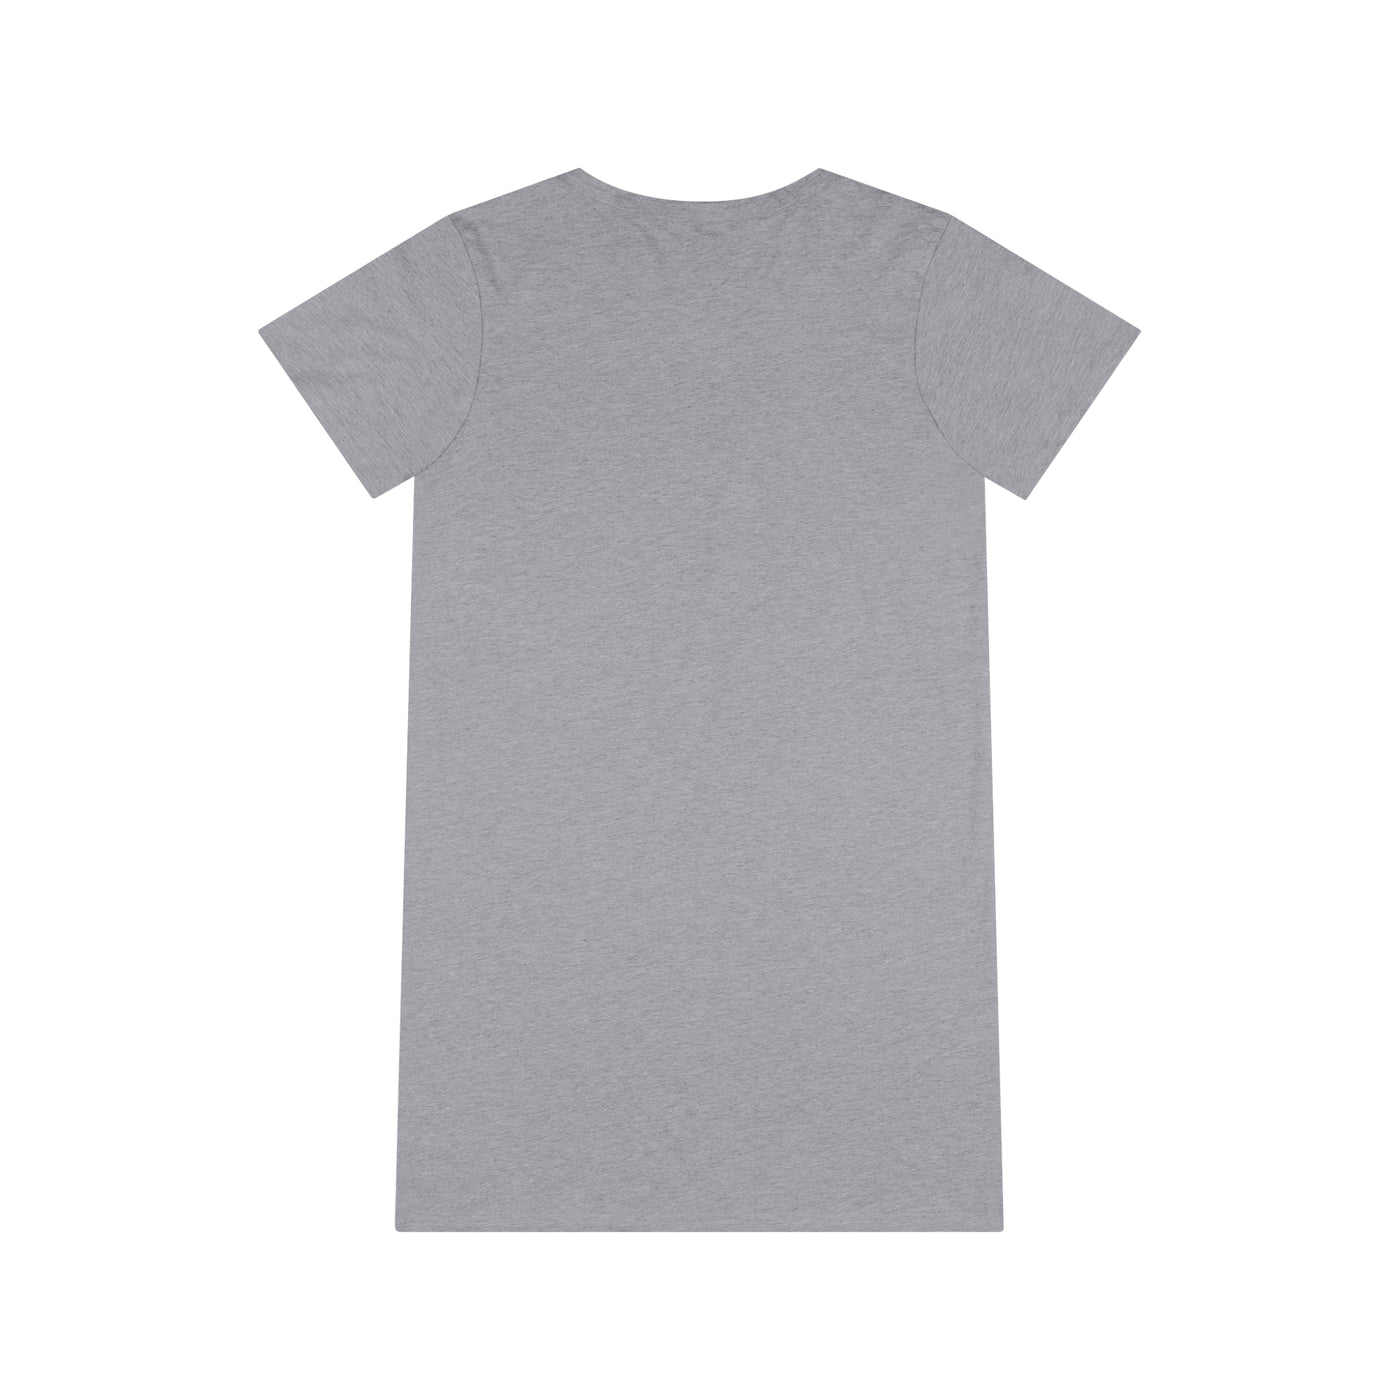 Prosperous Way - Organic Sleep T-Shirt Dress